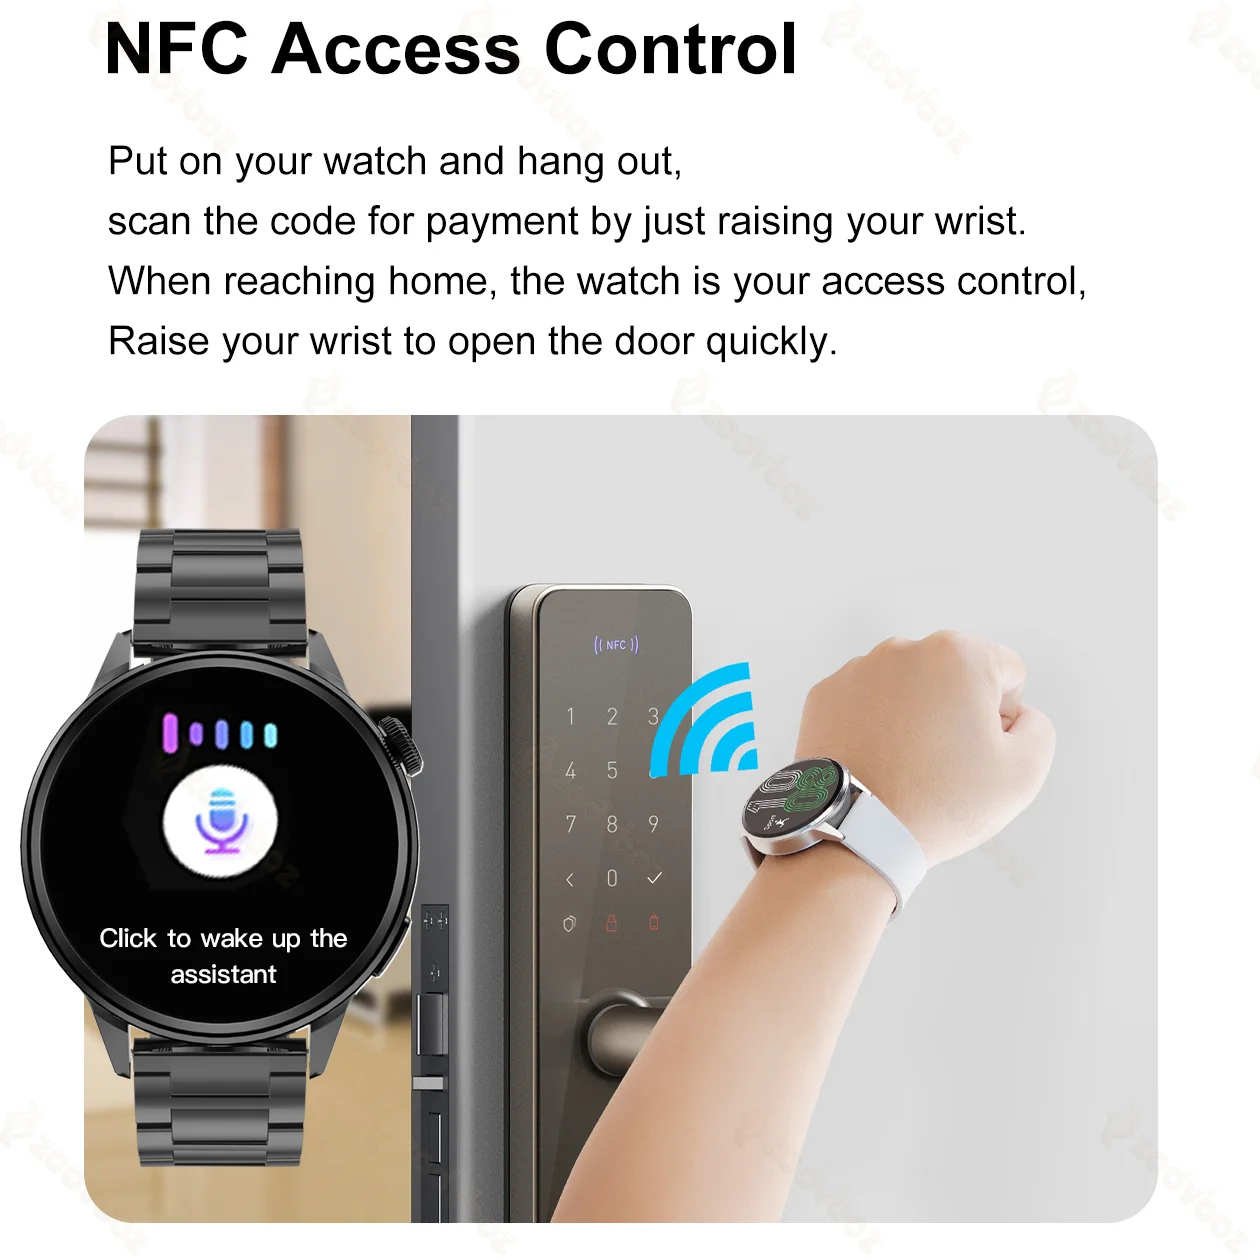 2022 NFC Smart Watch Men GPS Movement Track Sport Watches Women Wireless Charging Bluetooth Call ECG Smartwatch Support Hebrew |